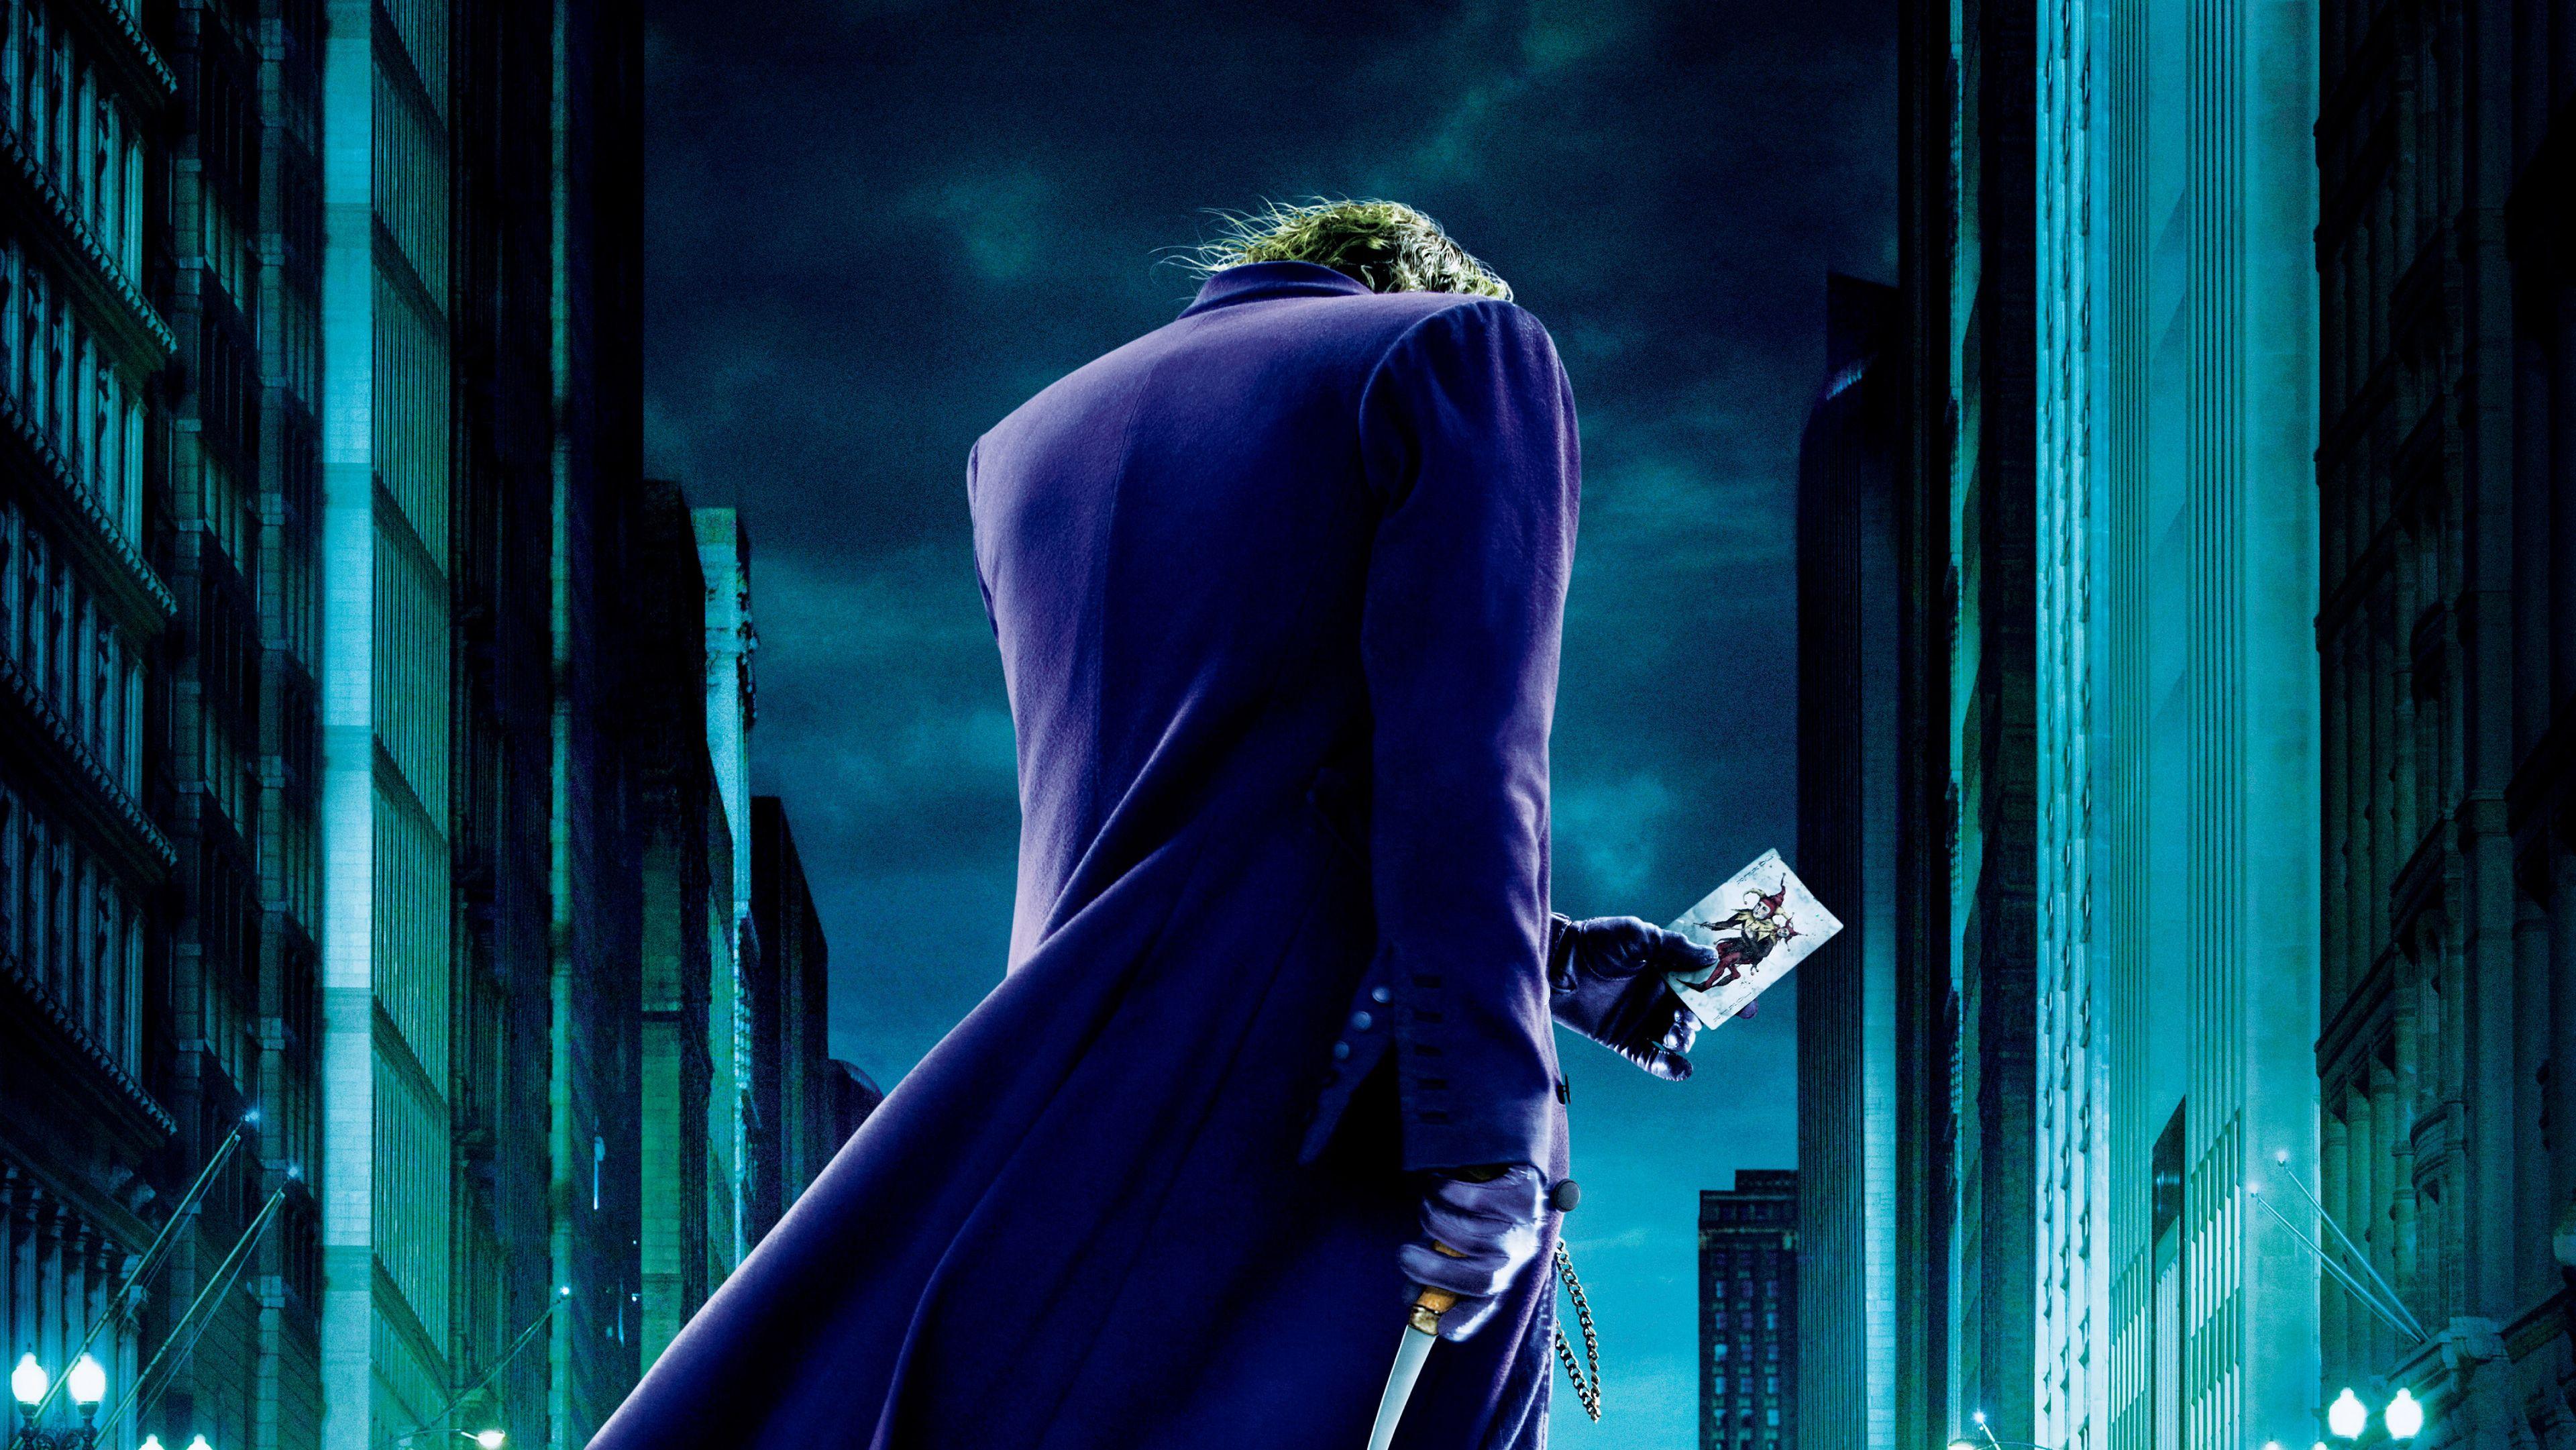 Dark Knight Joker In 4k Ultra Hd Wallpapers Top Free Dark